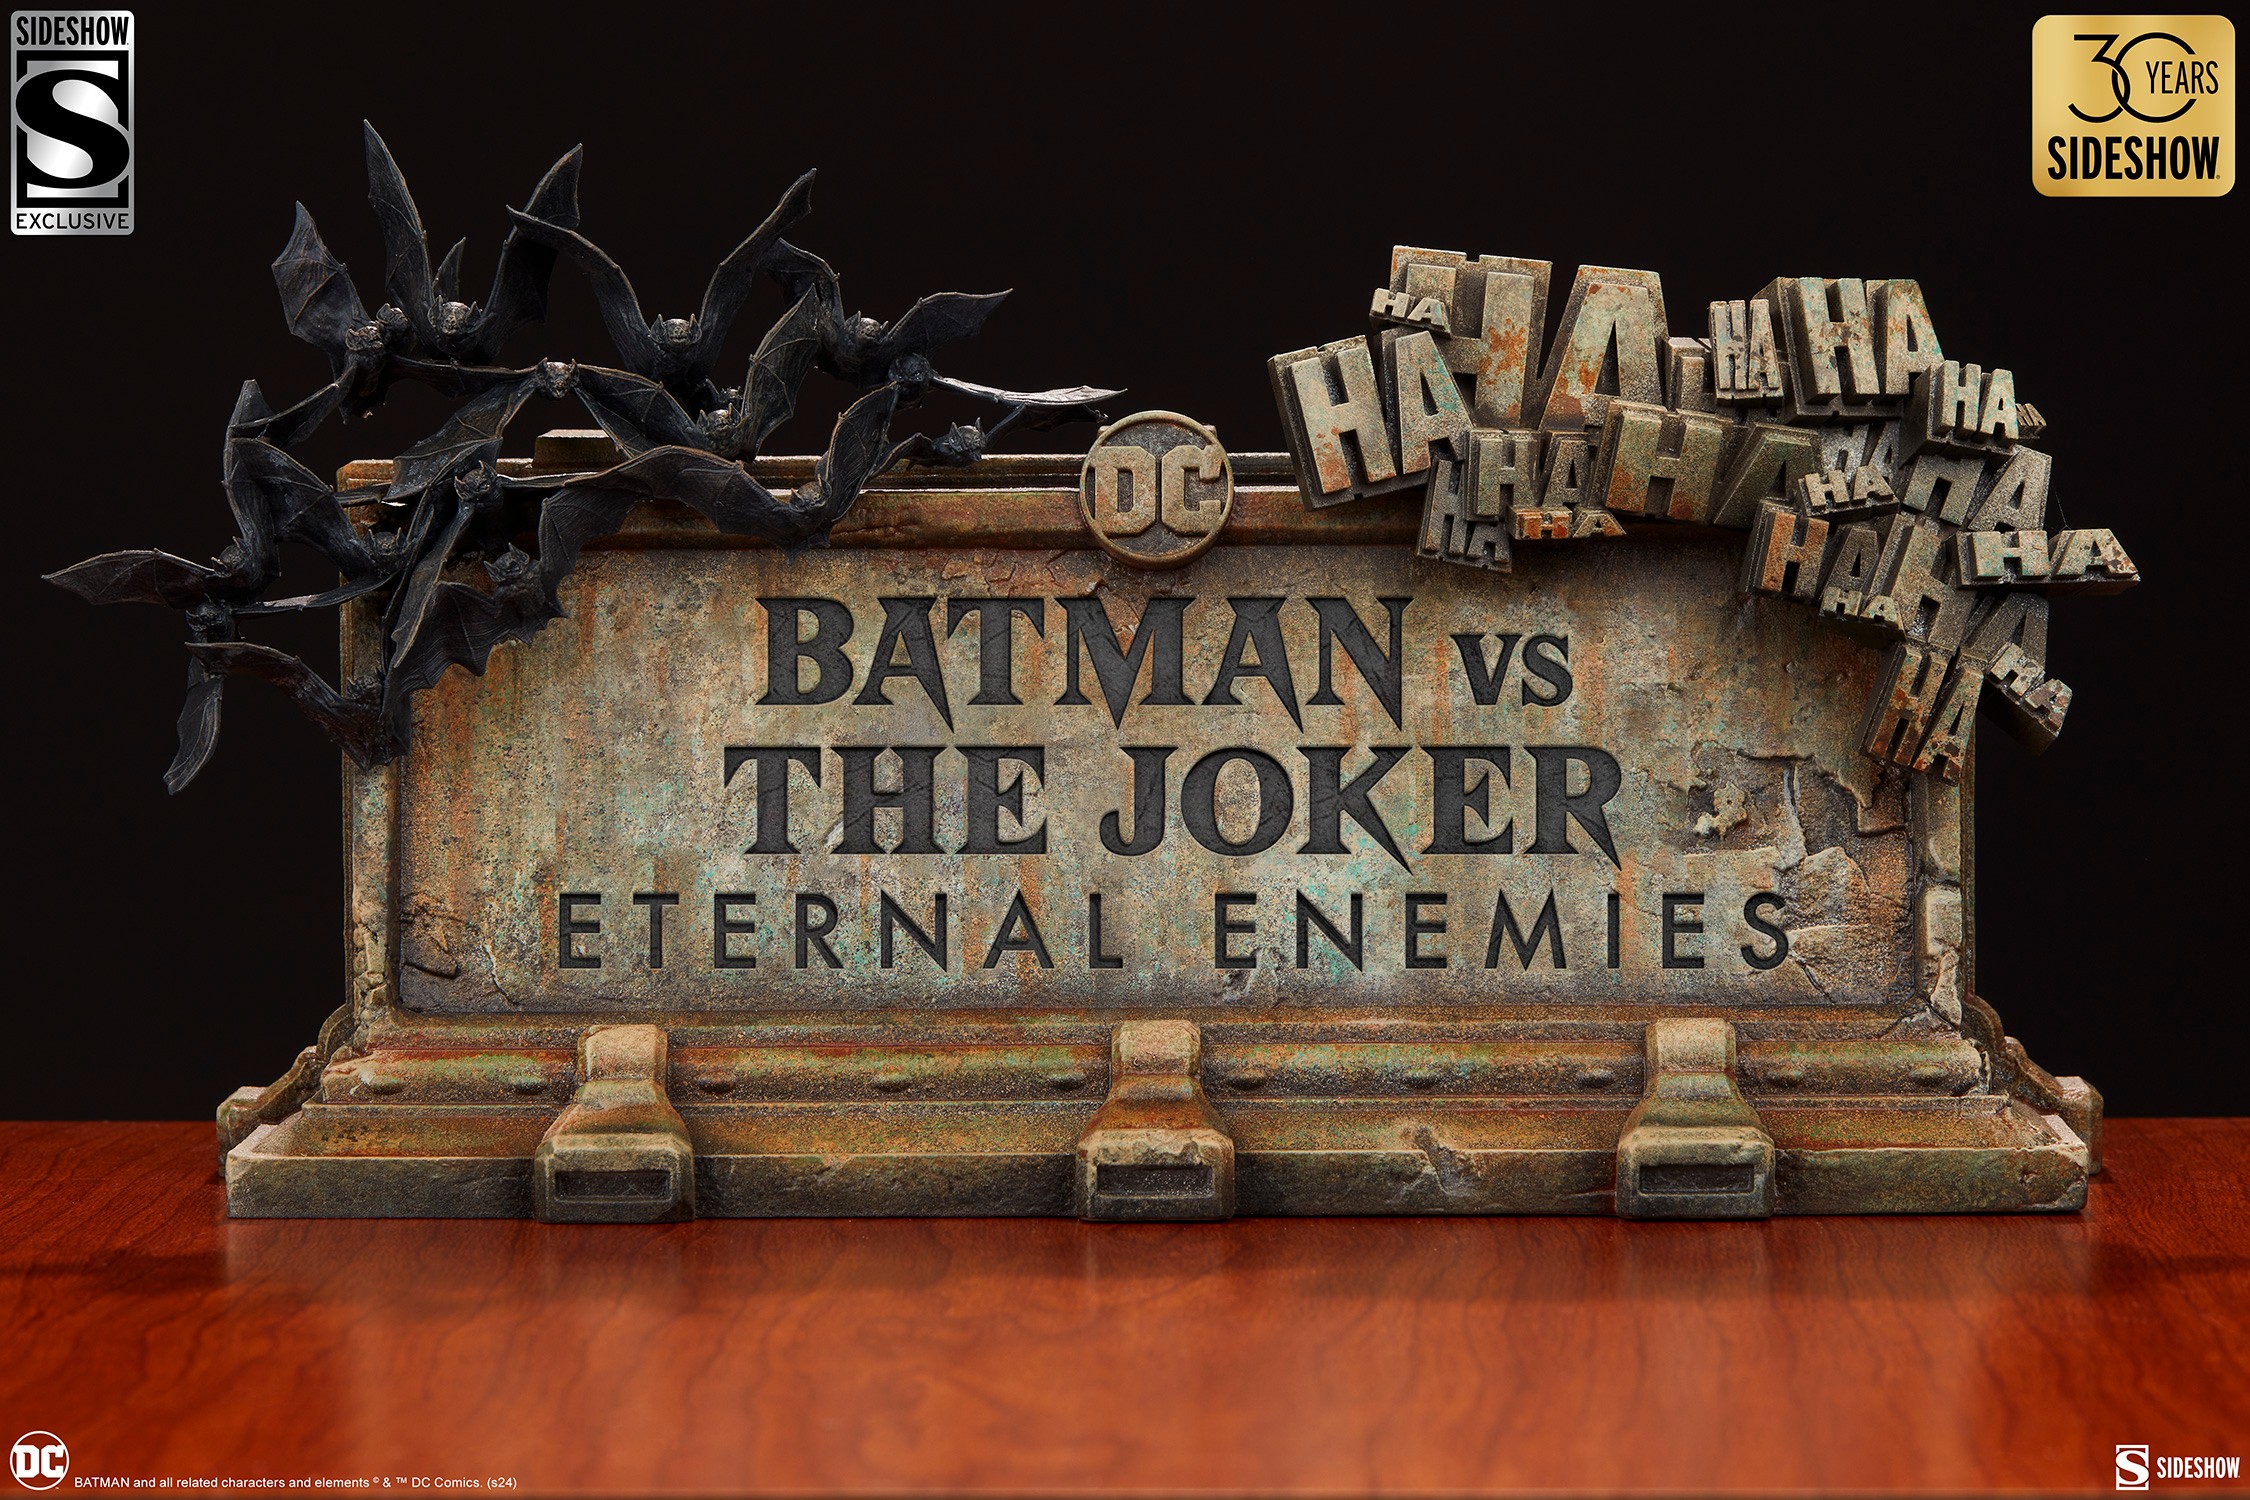 Batman vs The Joker: Eternal Enemies Exclusive Edition (Prototype Shown) View 2